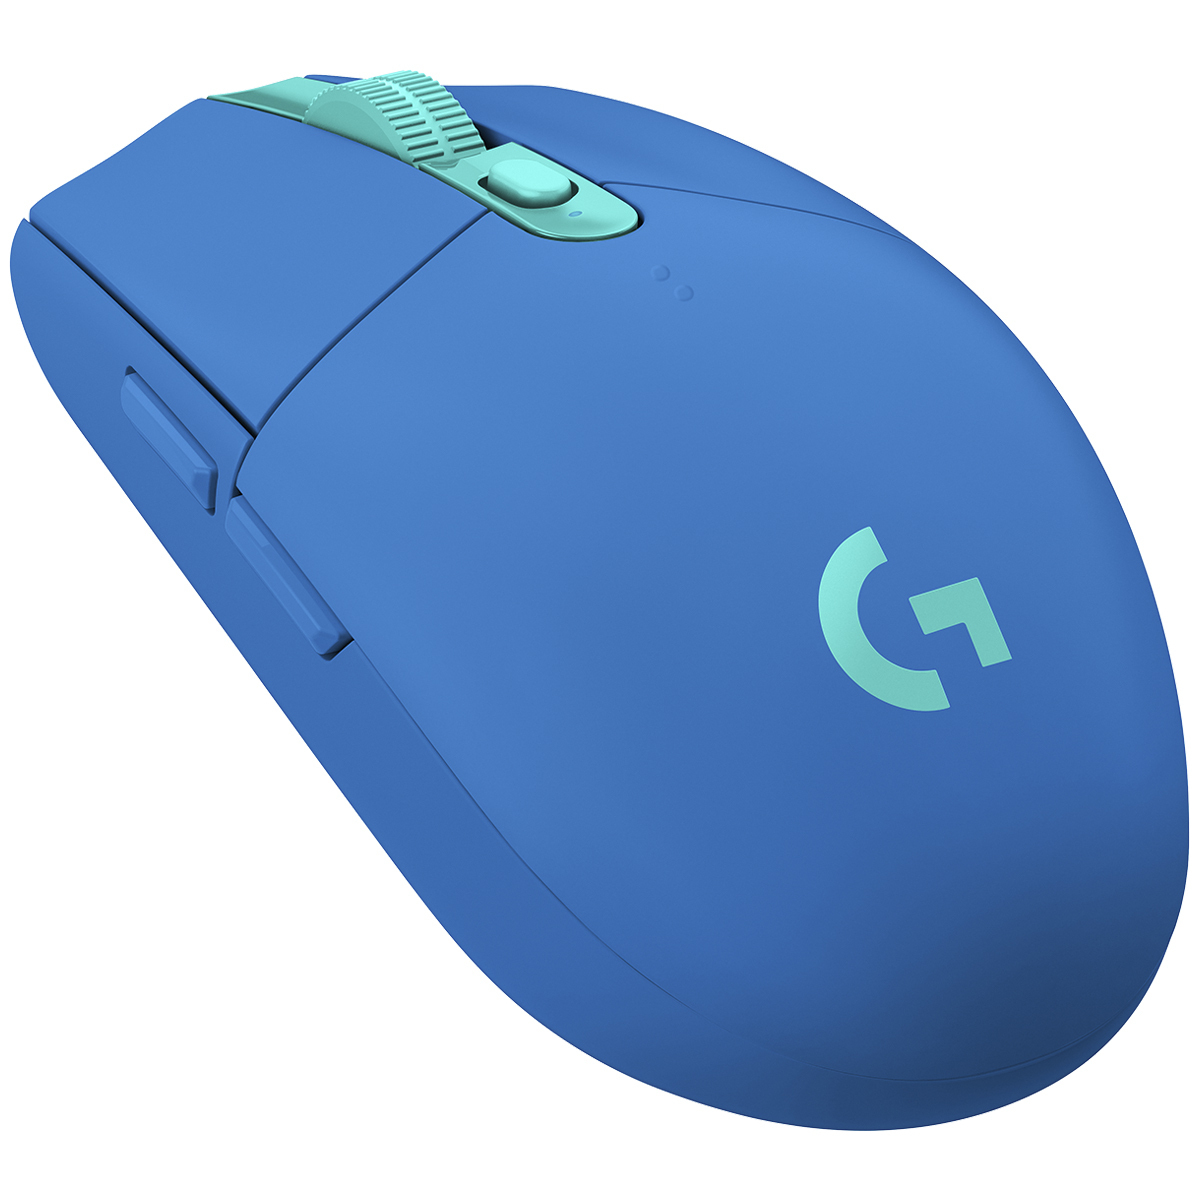 Mouse Gamer Logitech G305 Inalámbrico Sensor Hero Bater 250h - Logitech